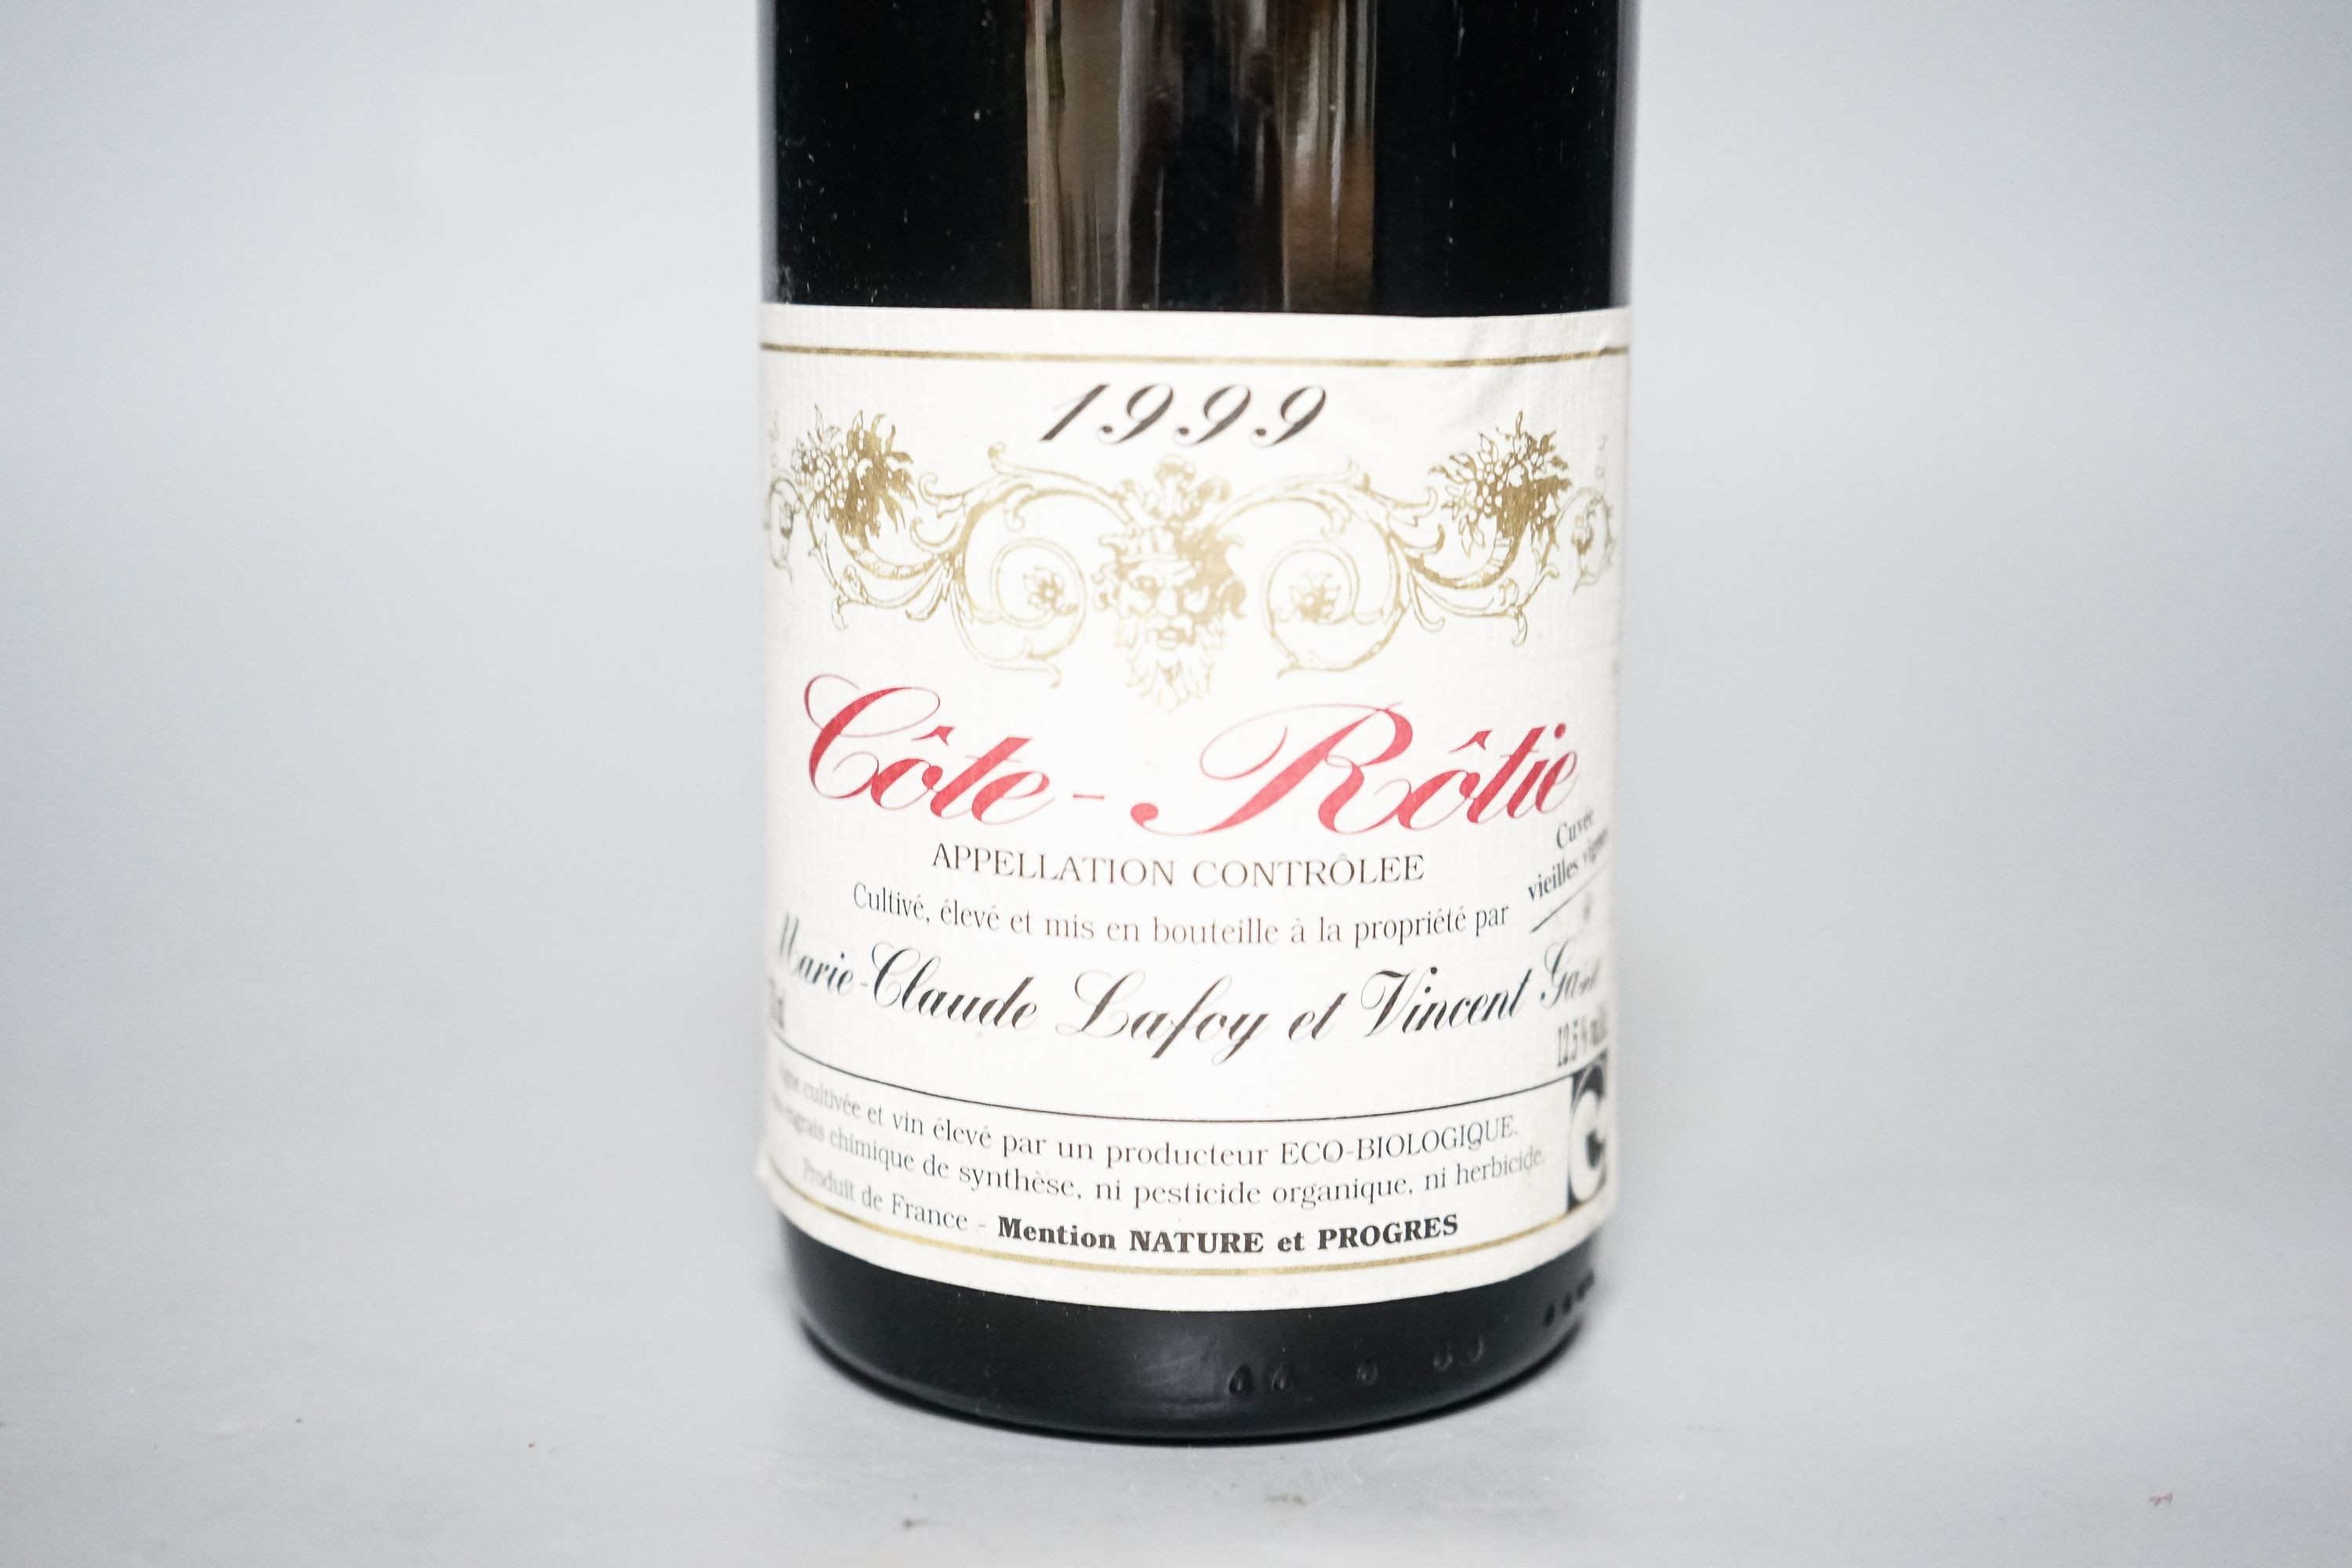 Five bottles of Cote Rotie, 1999